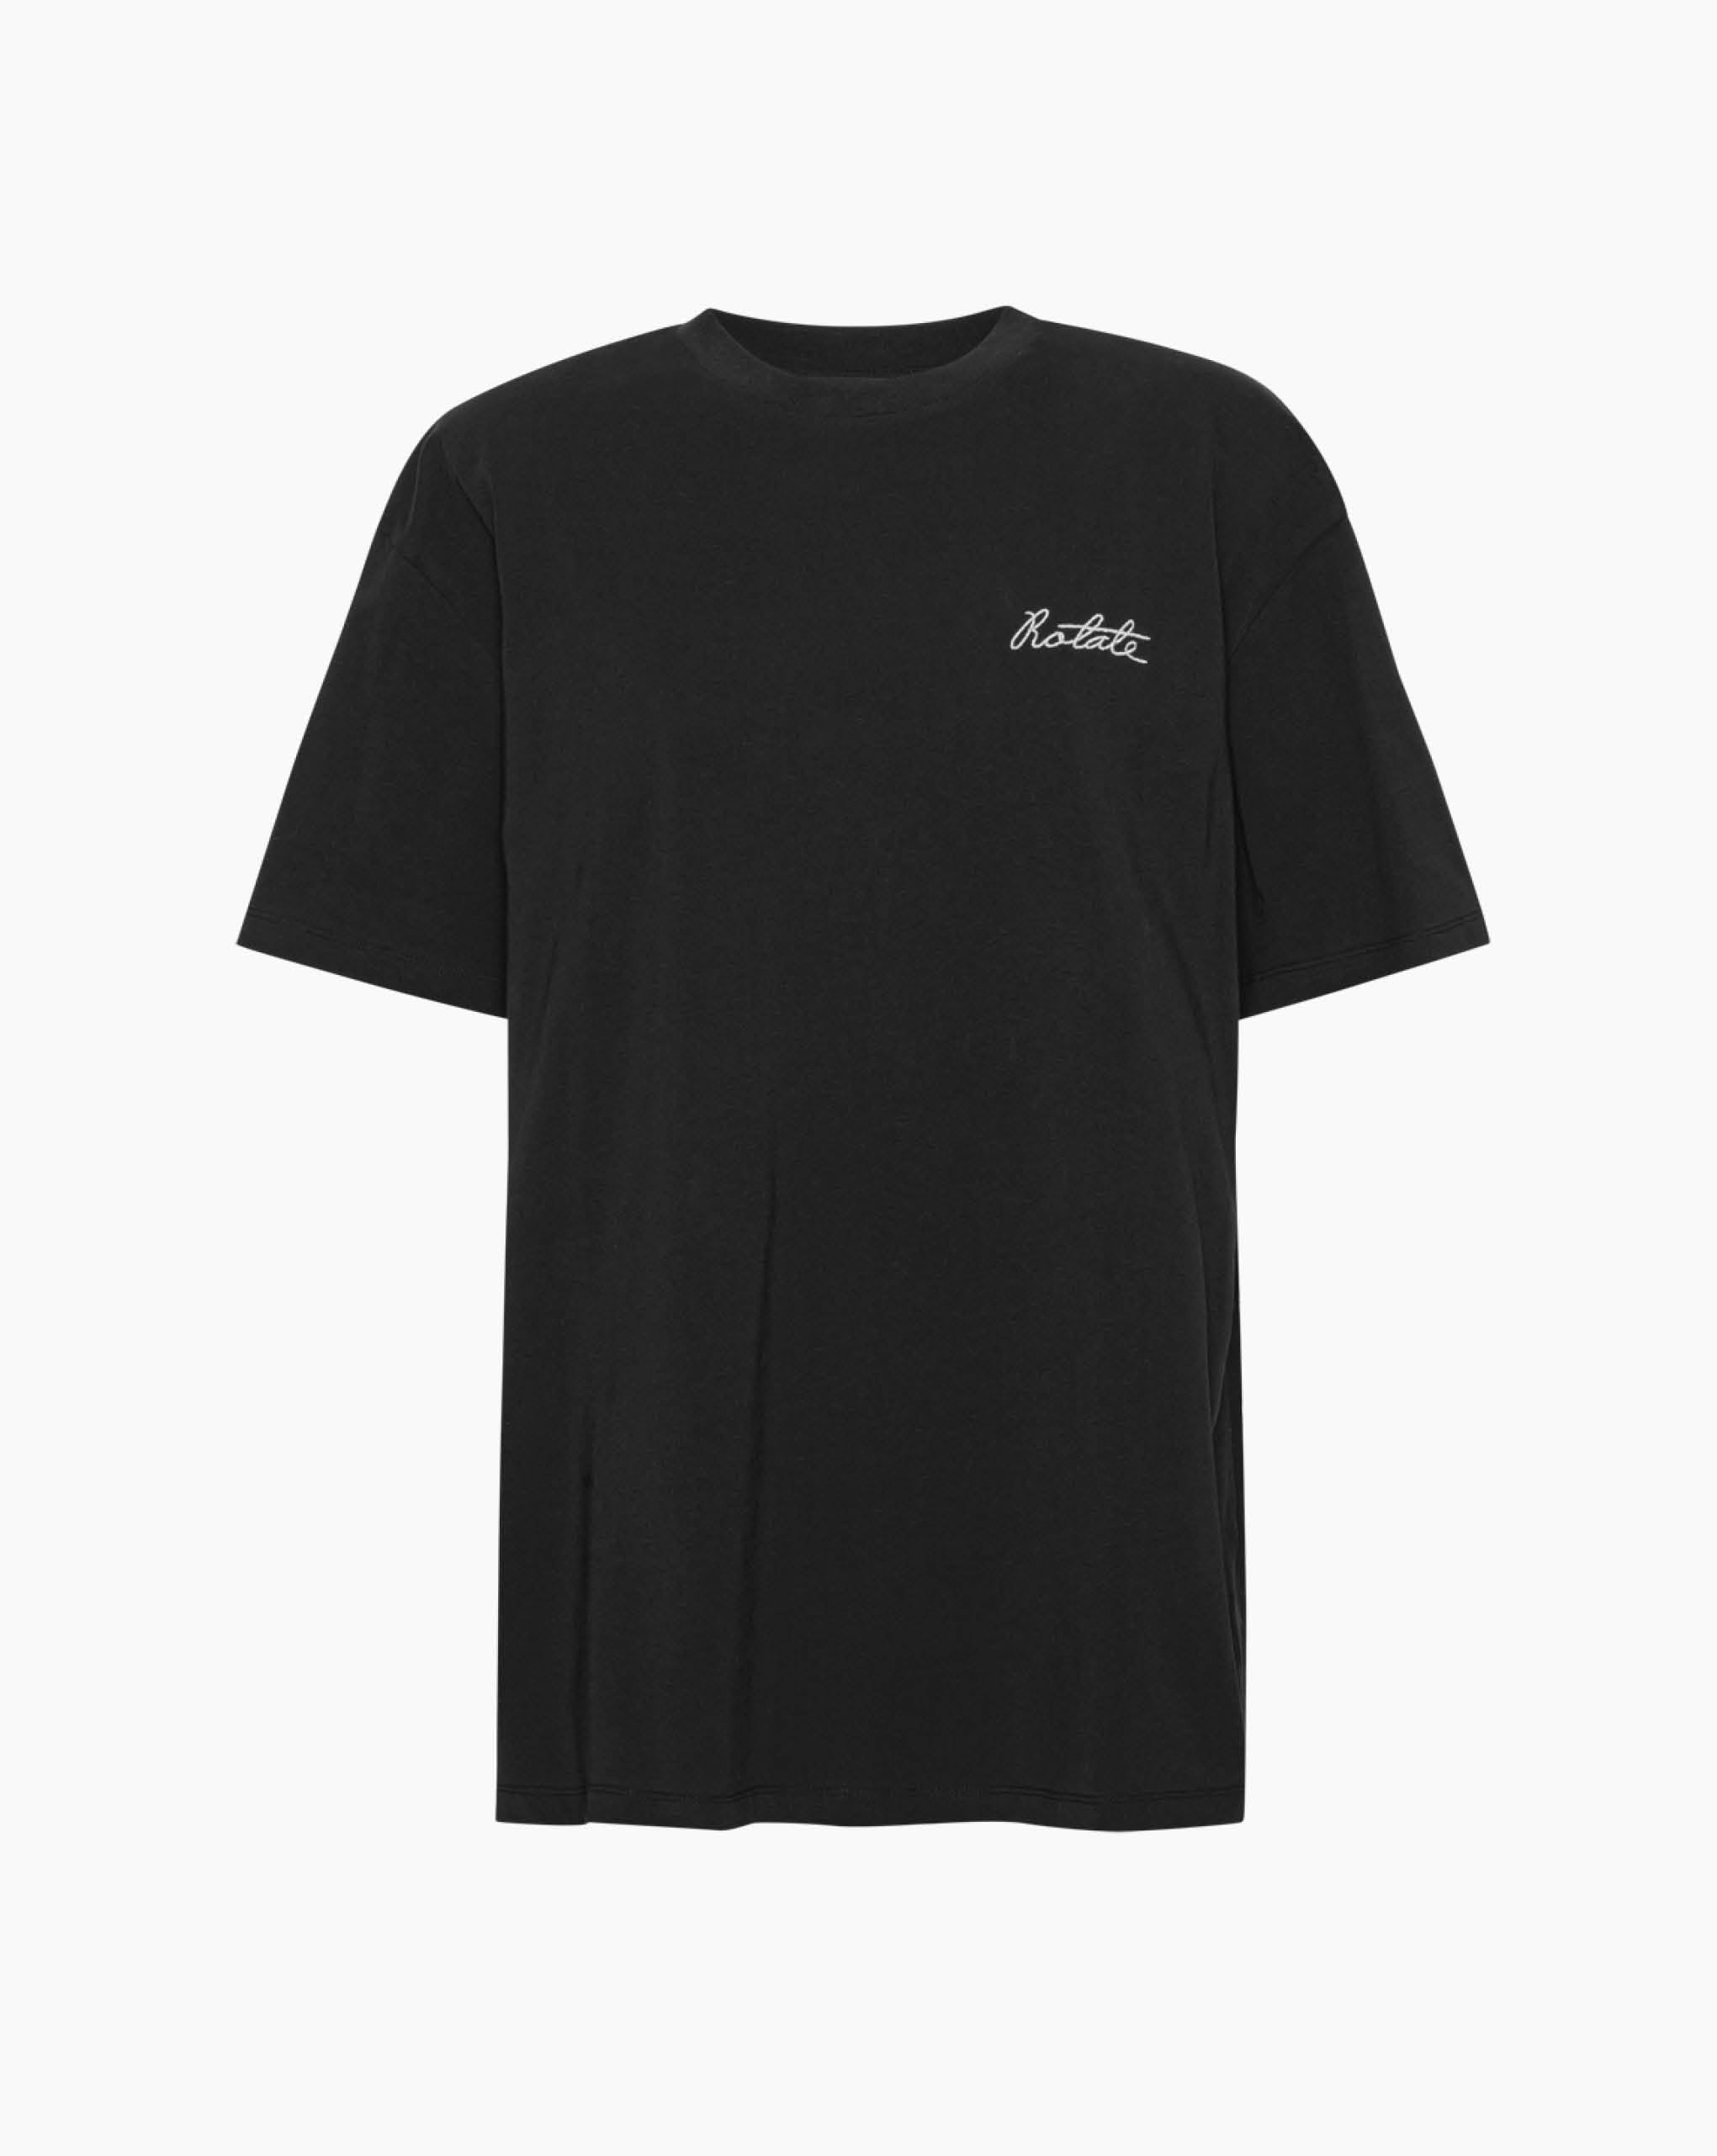 Graddy T-Shirt Black